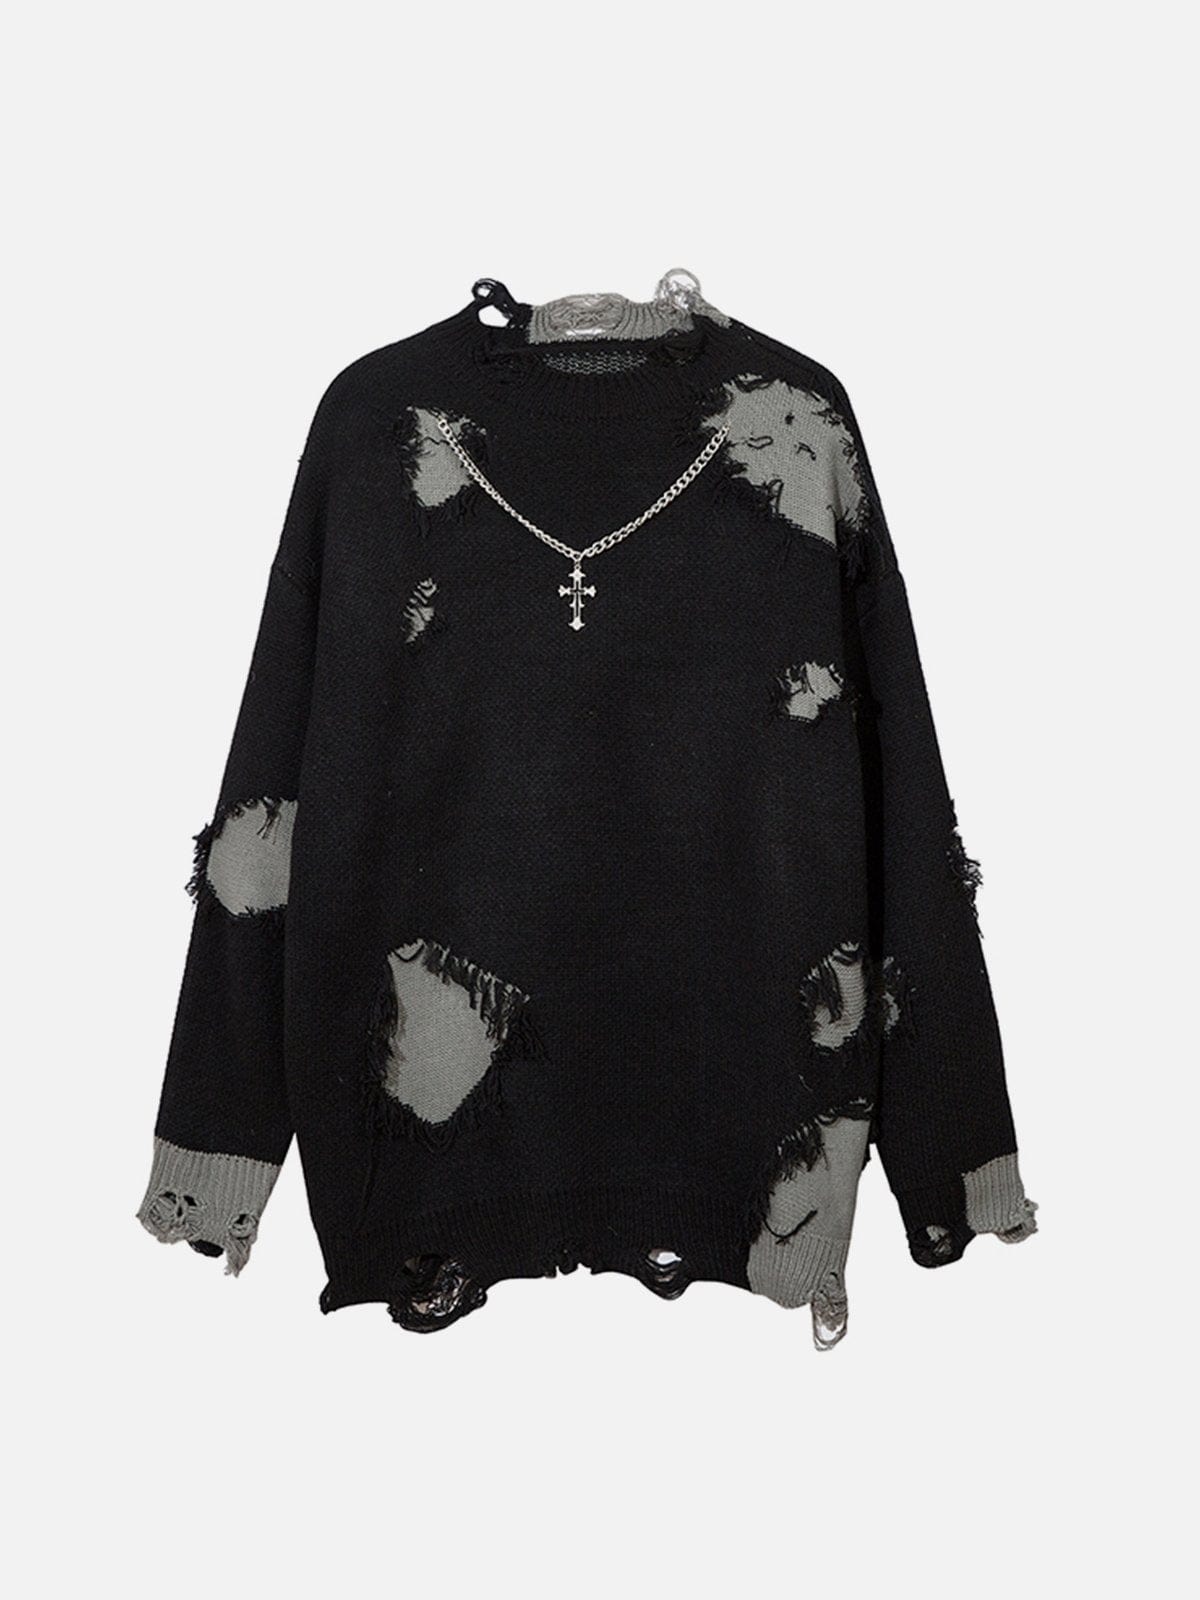 NEV Hole Crucifix Necklace Sweater